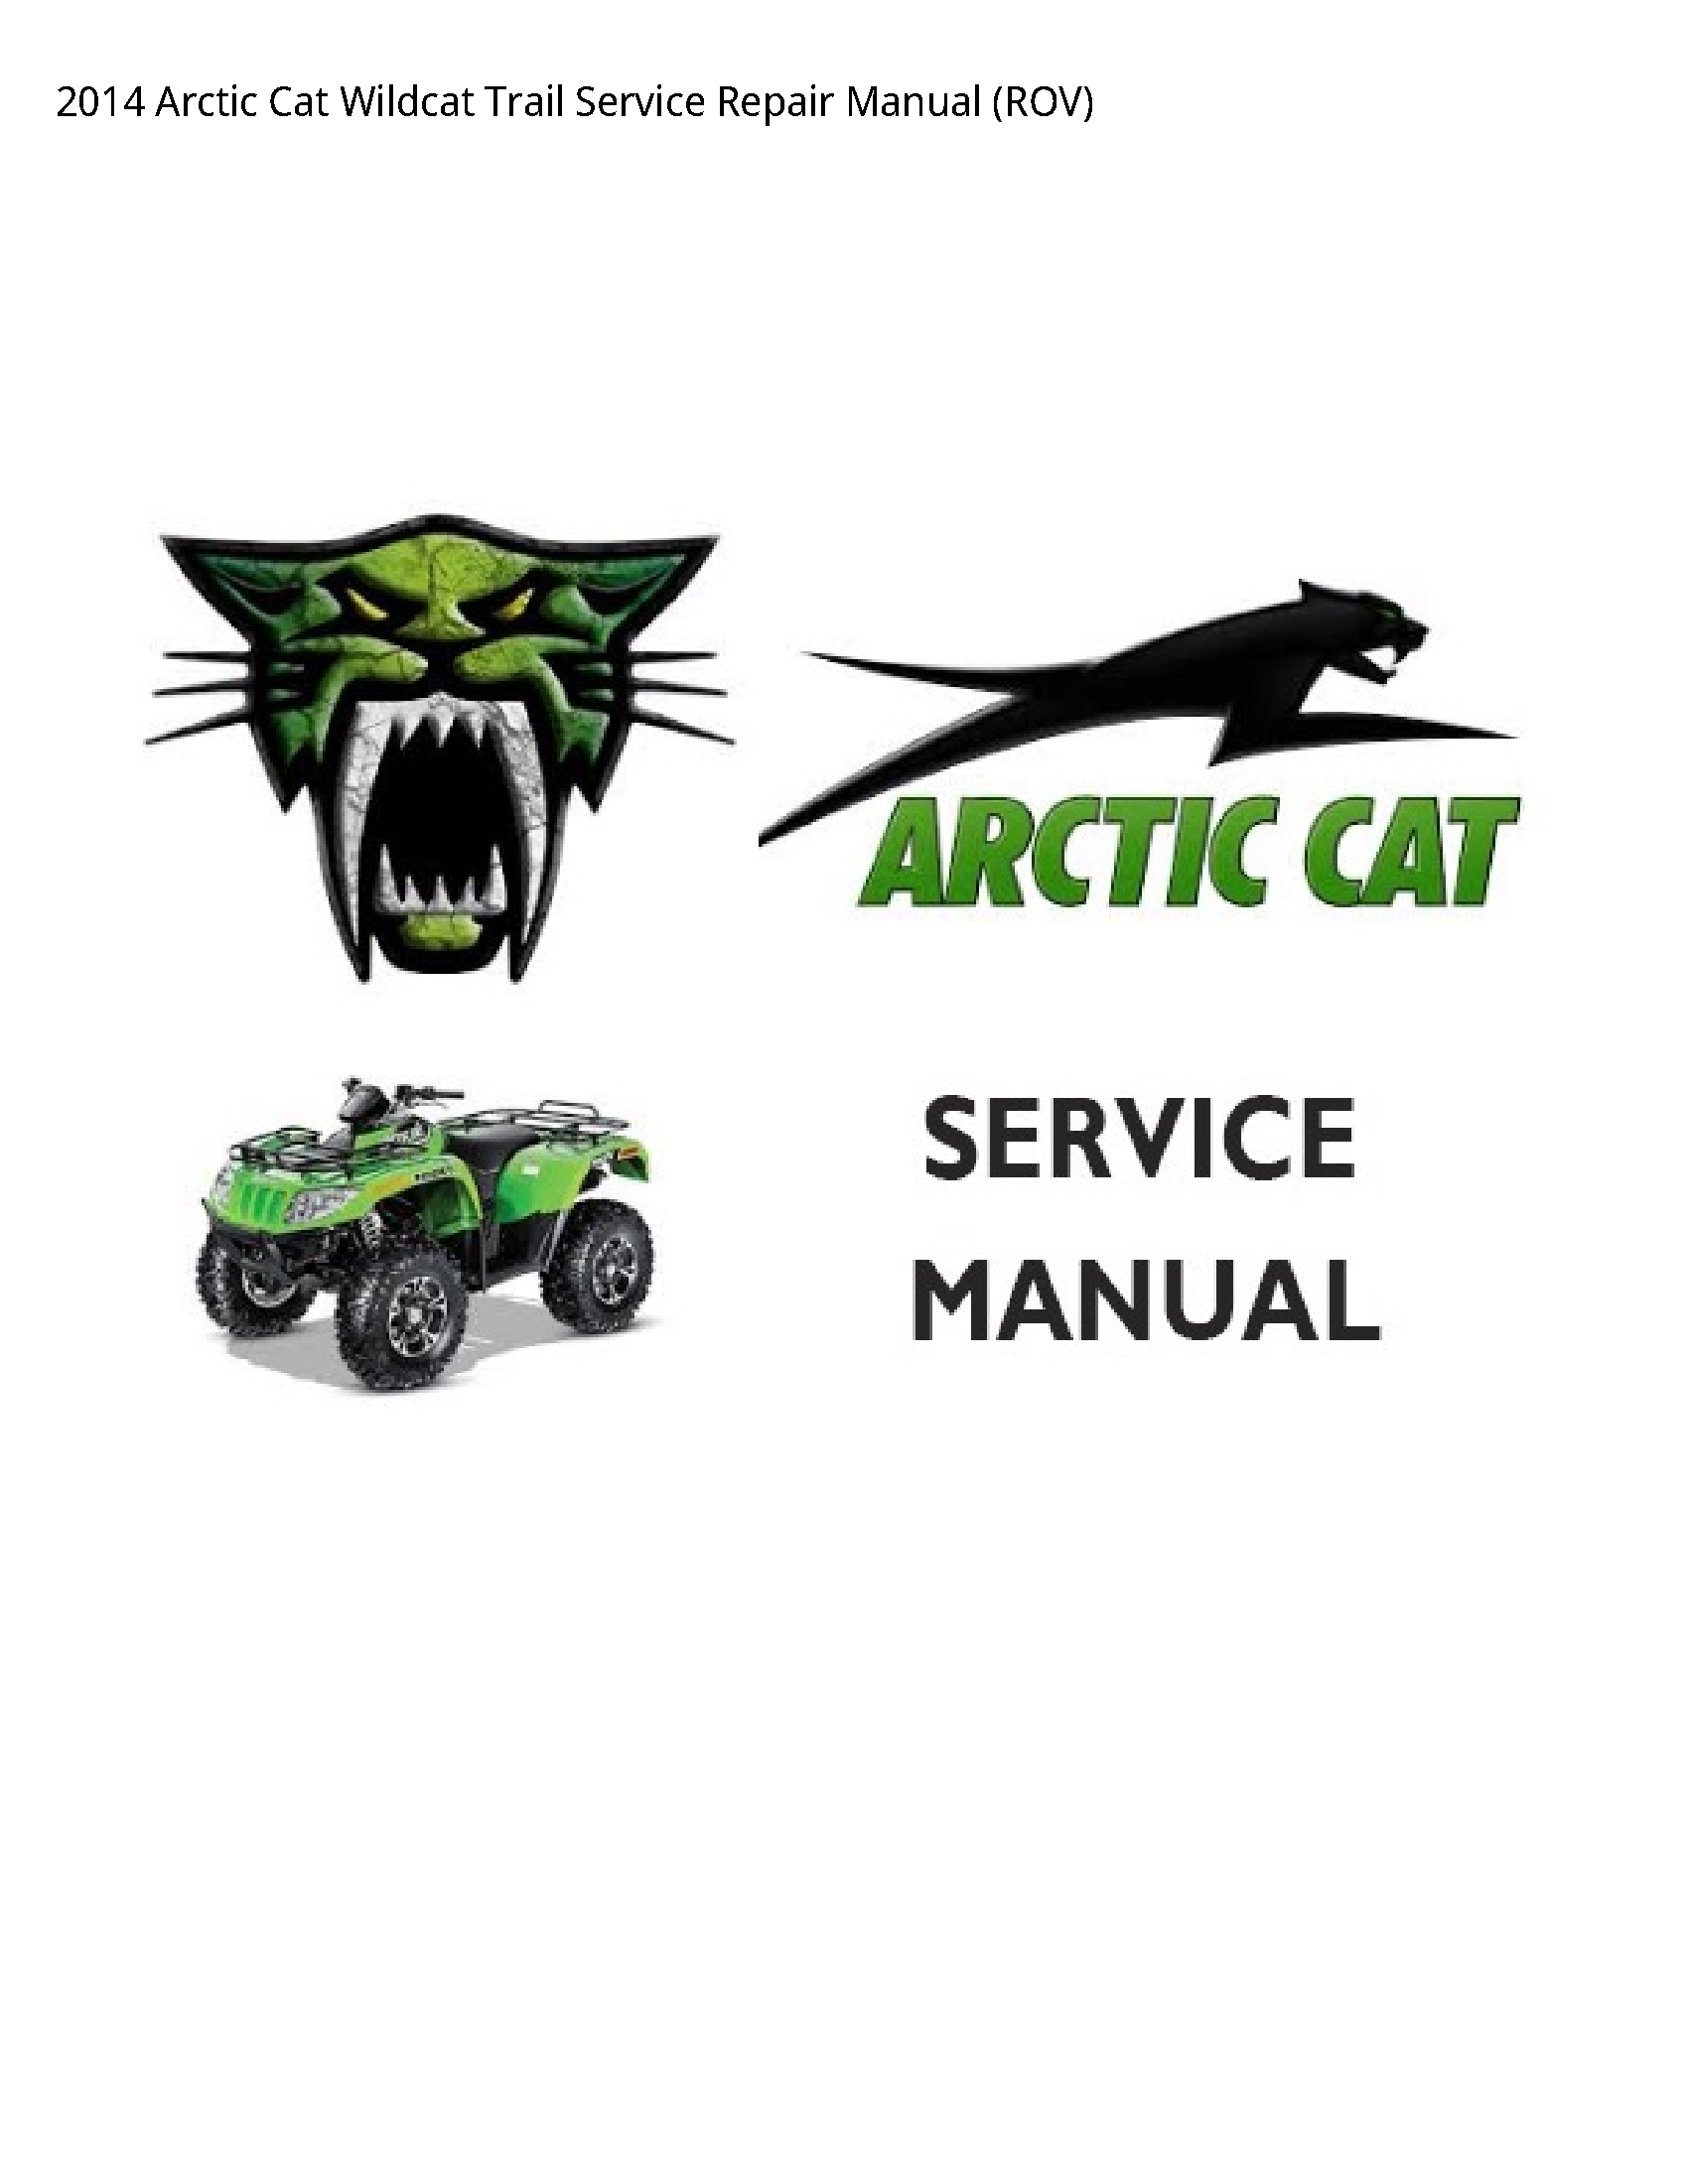 Arctic Cat Wildcat Trail manual